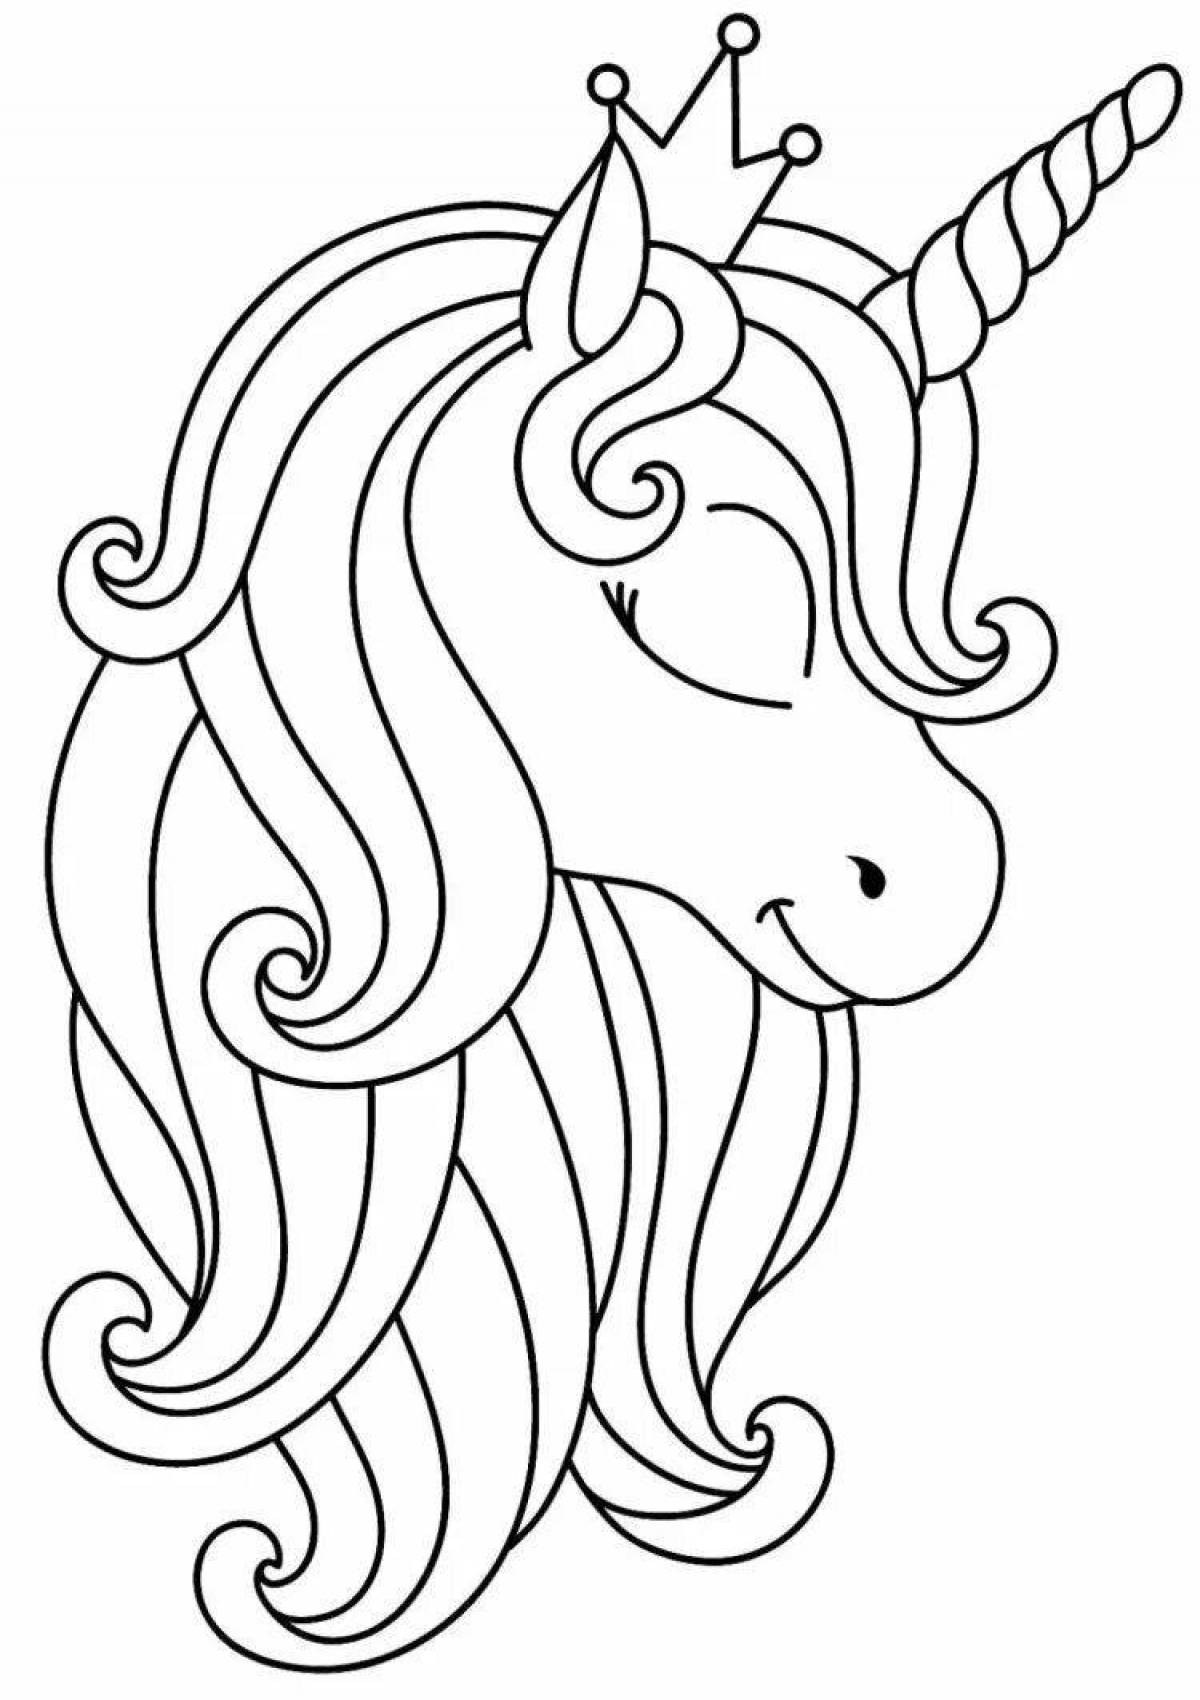 Joyful unicorn coloring book